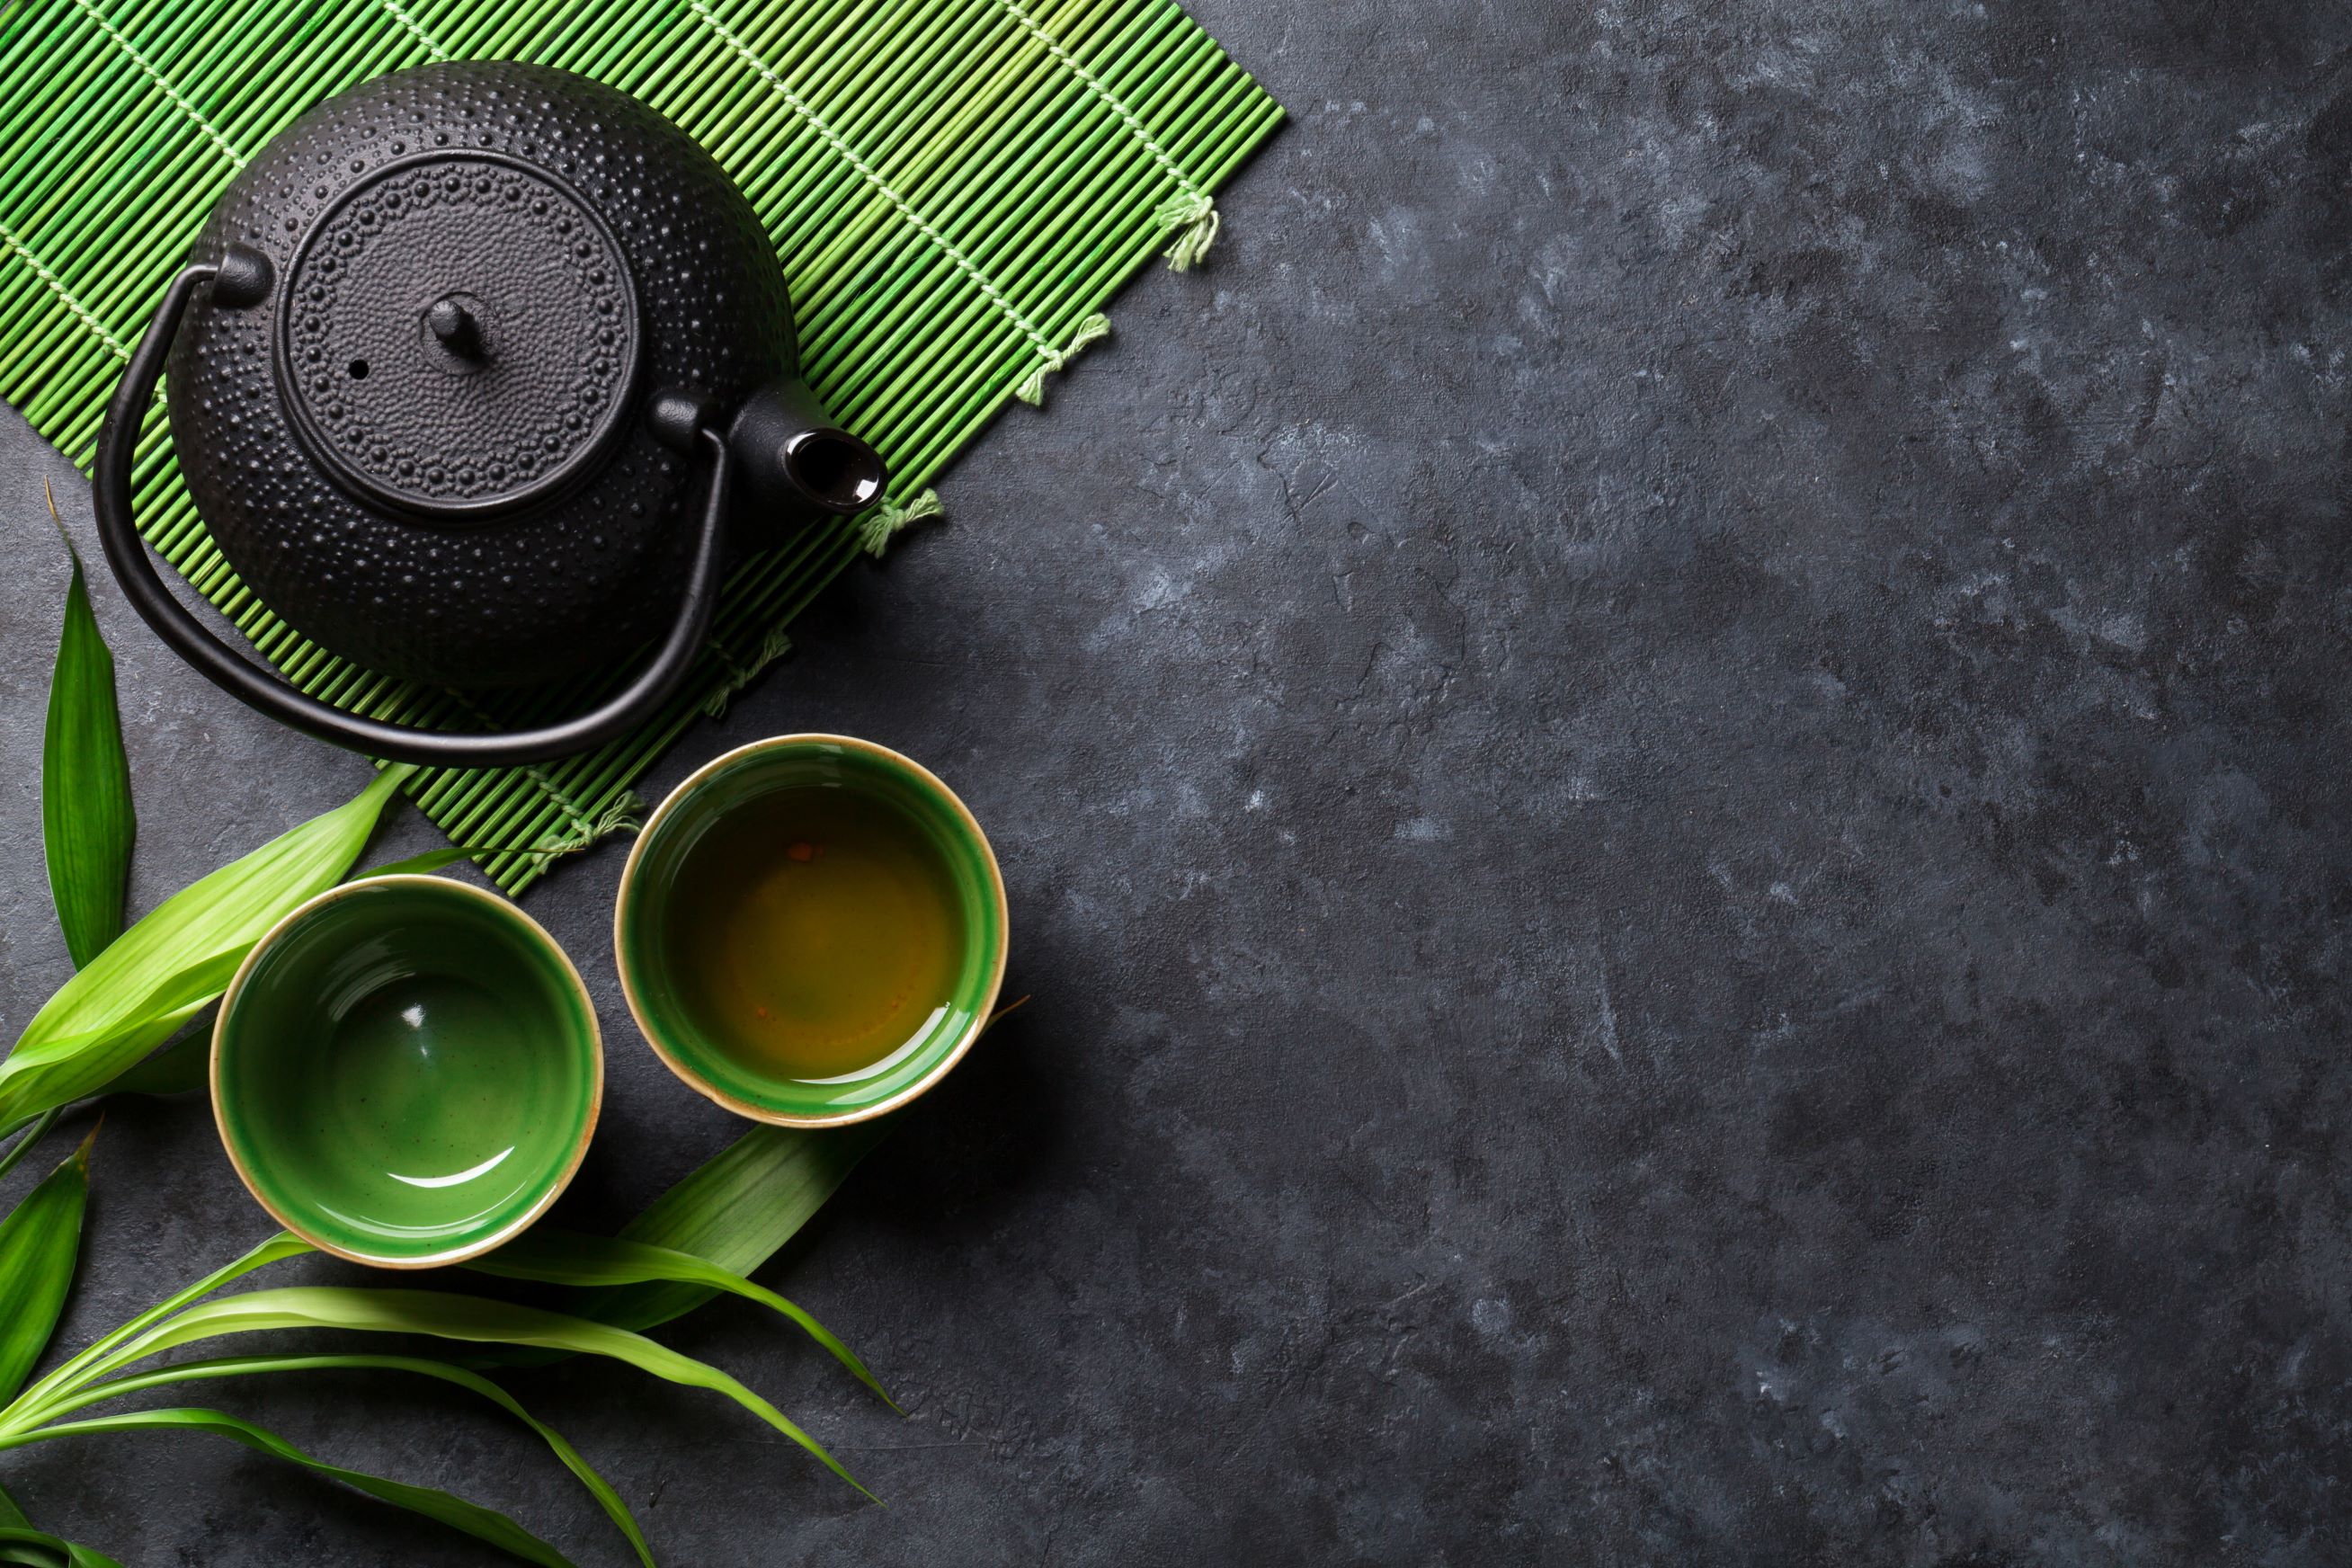 Cup of green and black tea next to black tea-pot